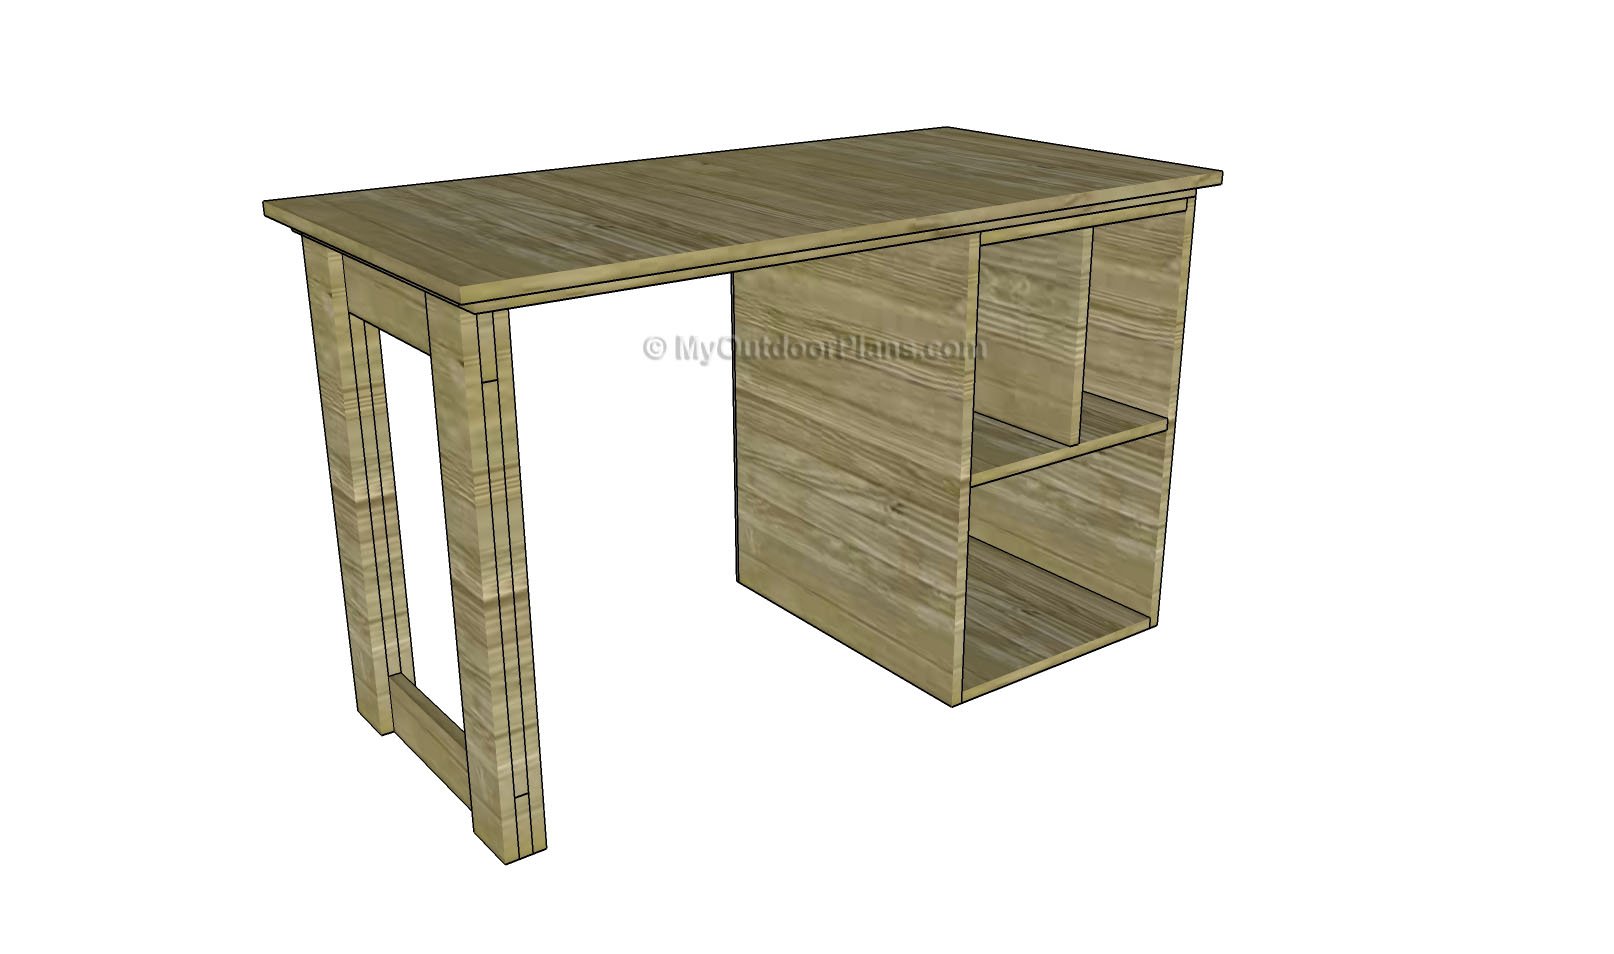 Wood Desk Plans Free